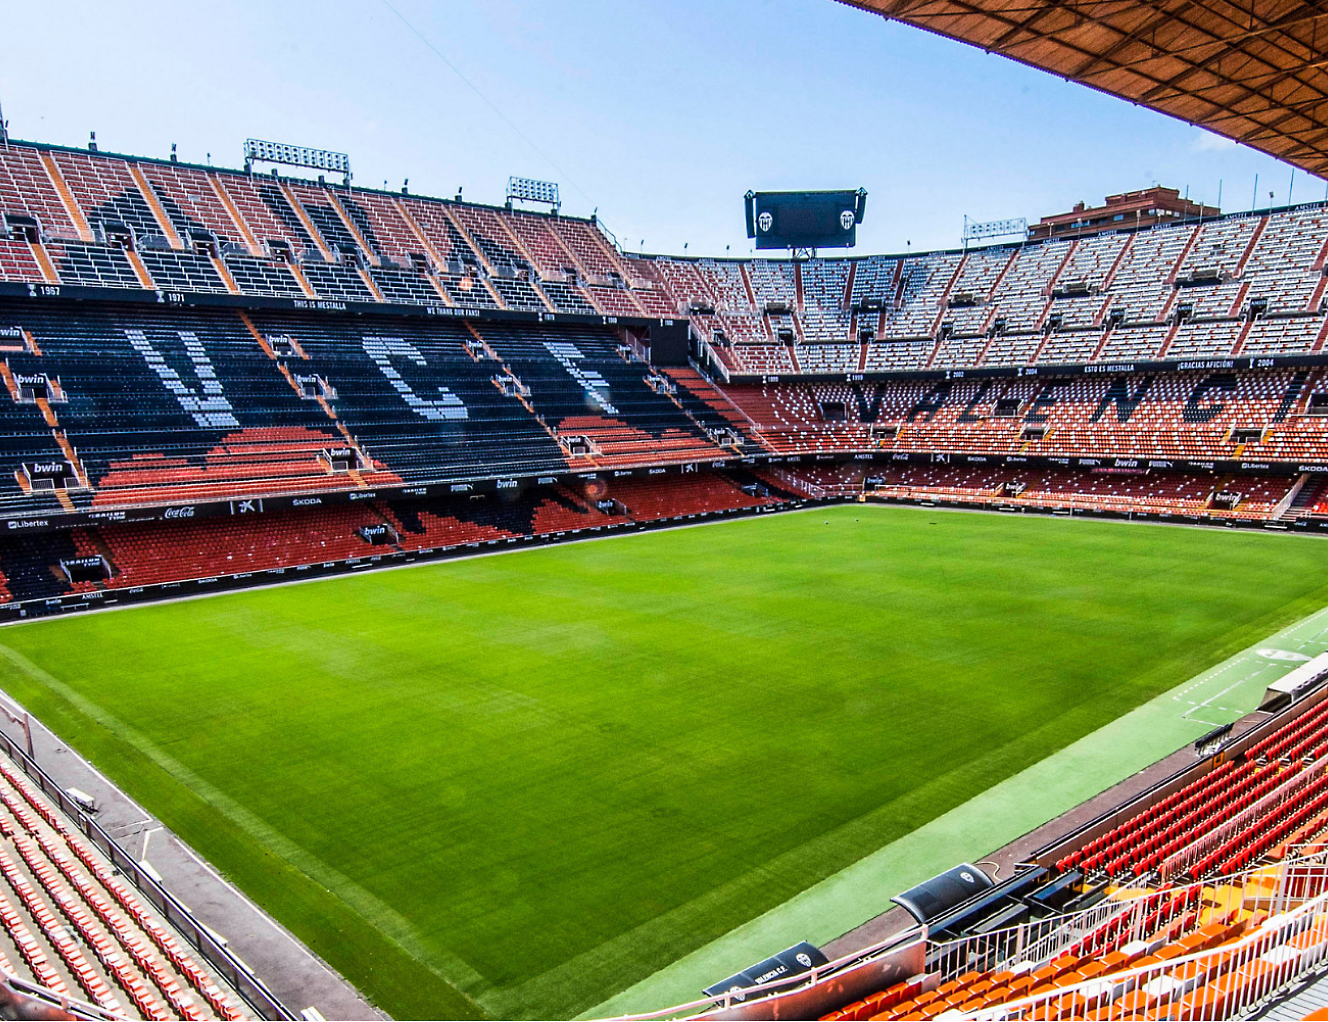 Intérieur d’un stade de football avec un terrain orange.